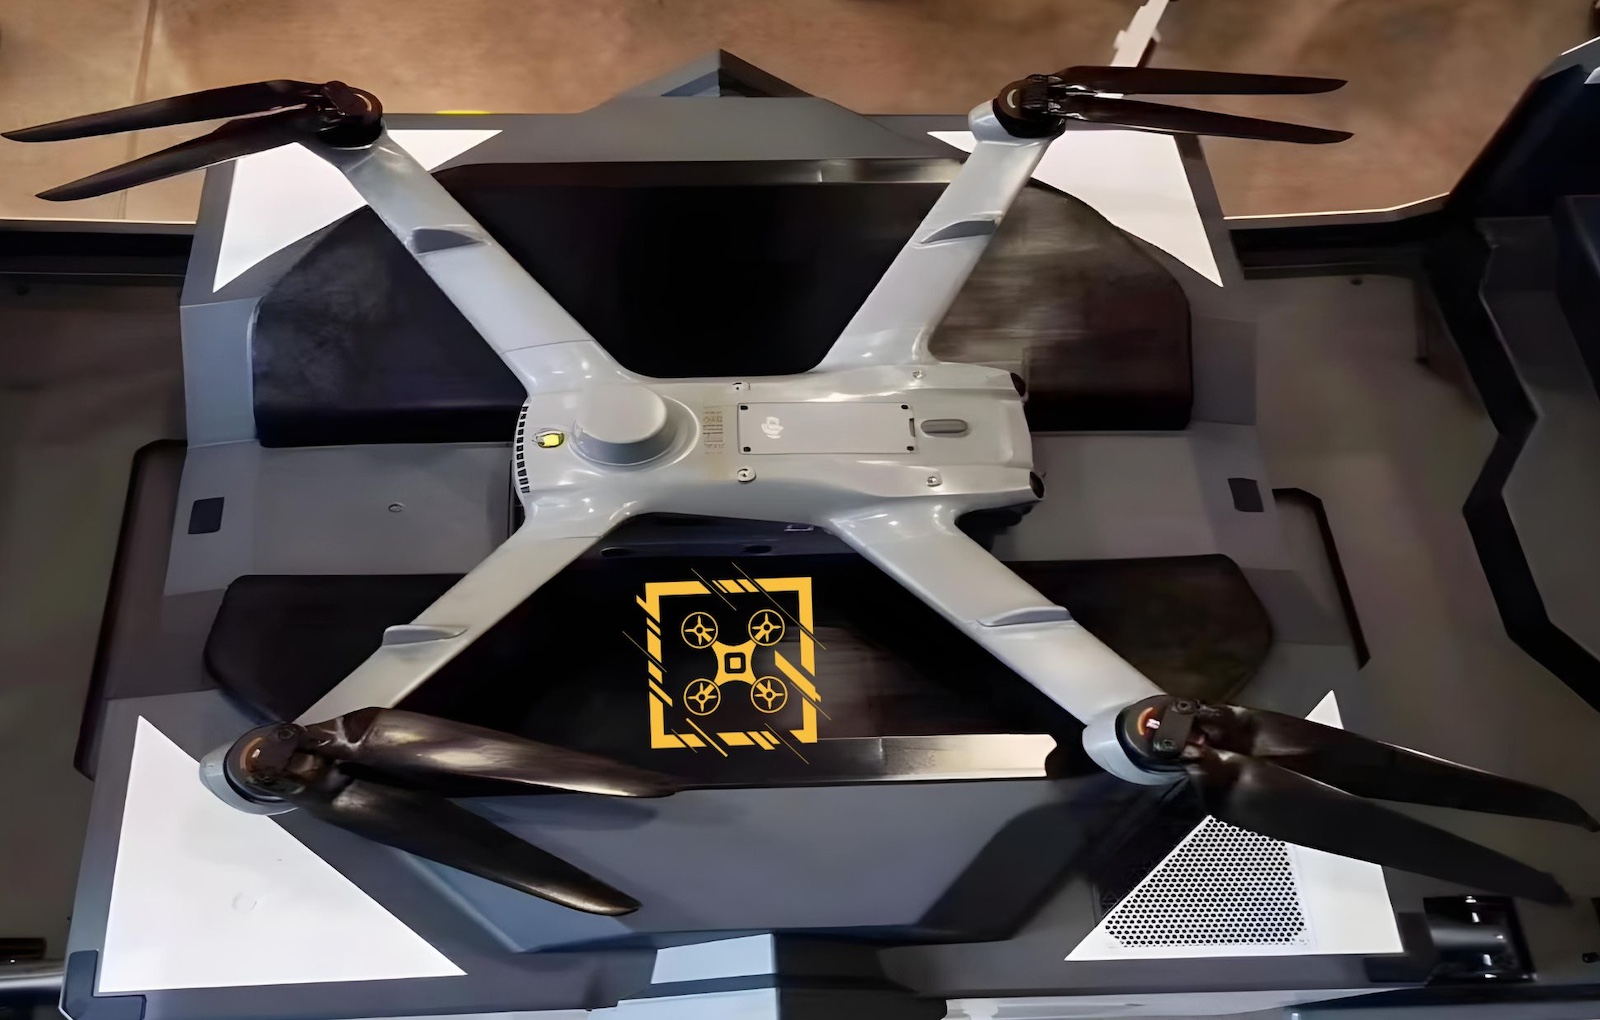 DJI-Matrice-3D-enterprise-drone-1.jpg